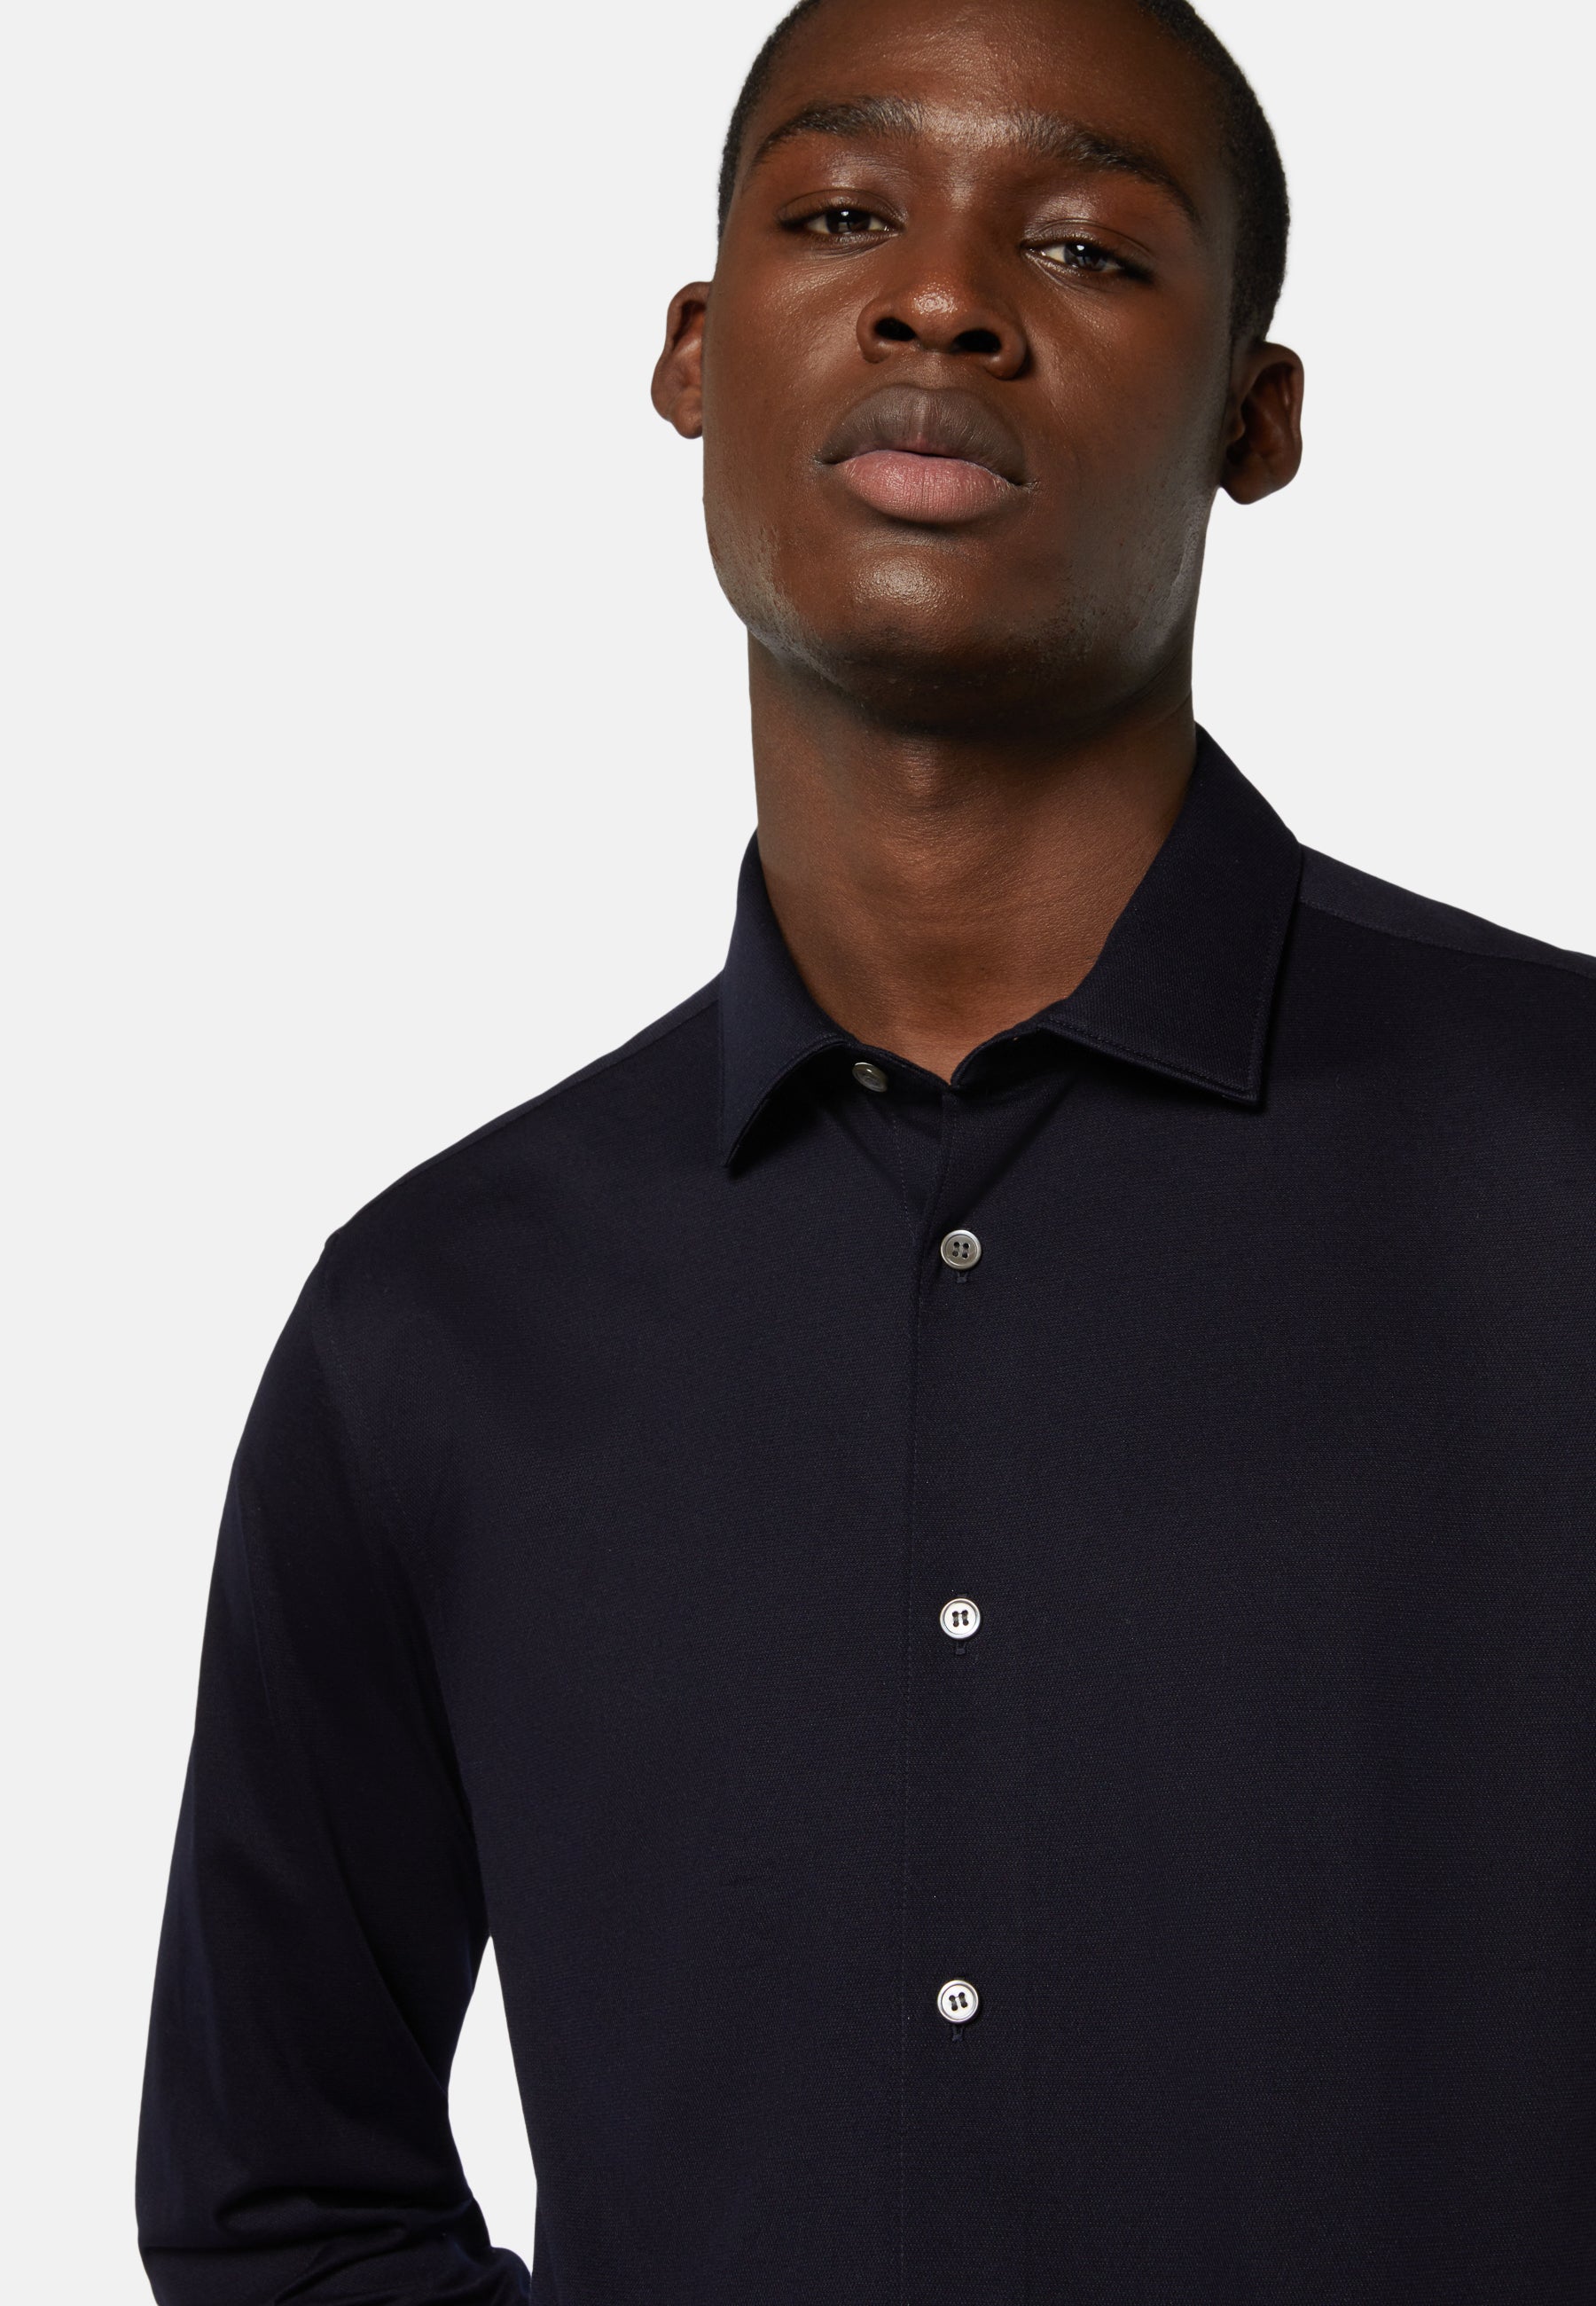 Elbow Sleeve Notch Neck Shirttail Hem Top – Geyermans Clothing Co.